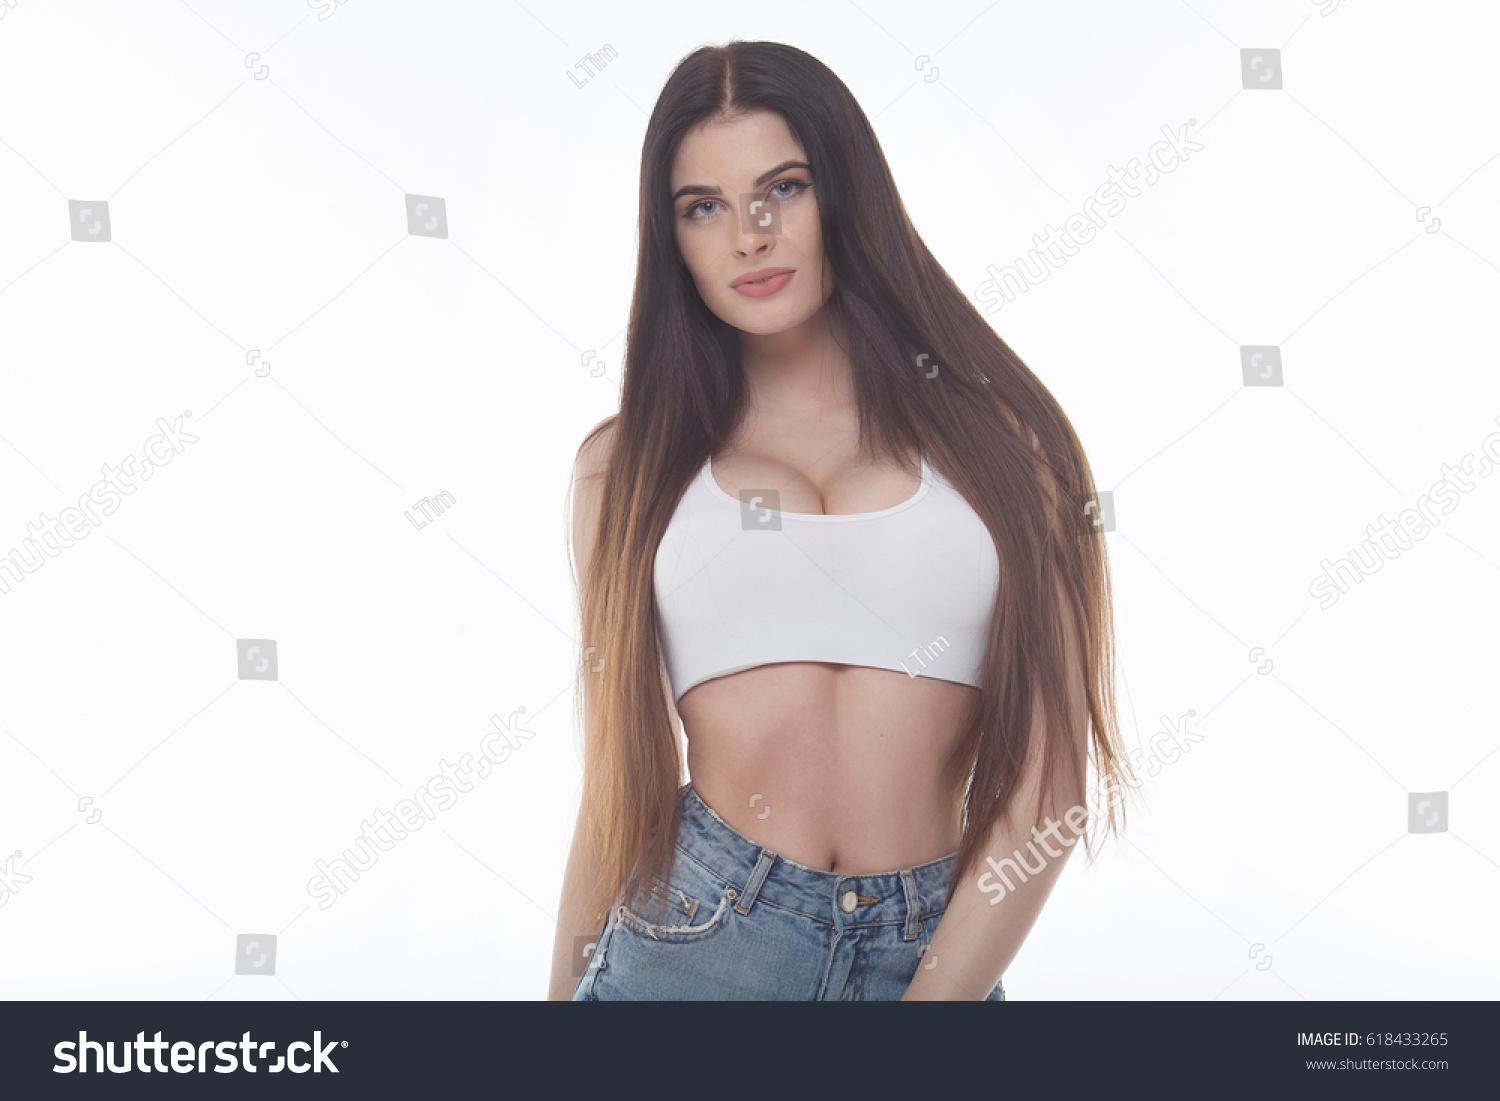 david shreiner add skinny girls nice tits photo